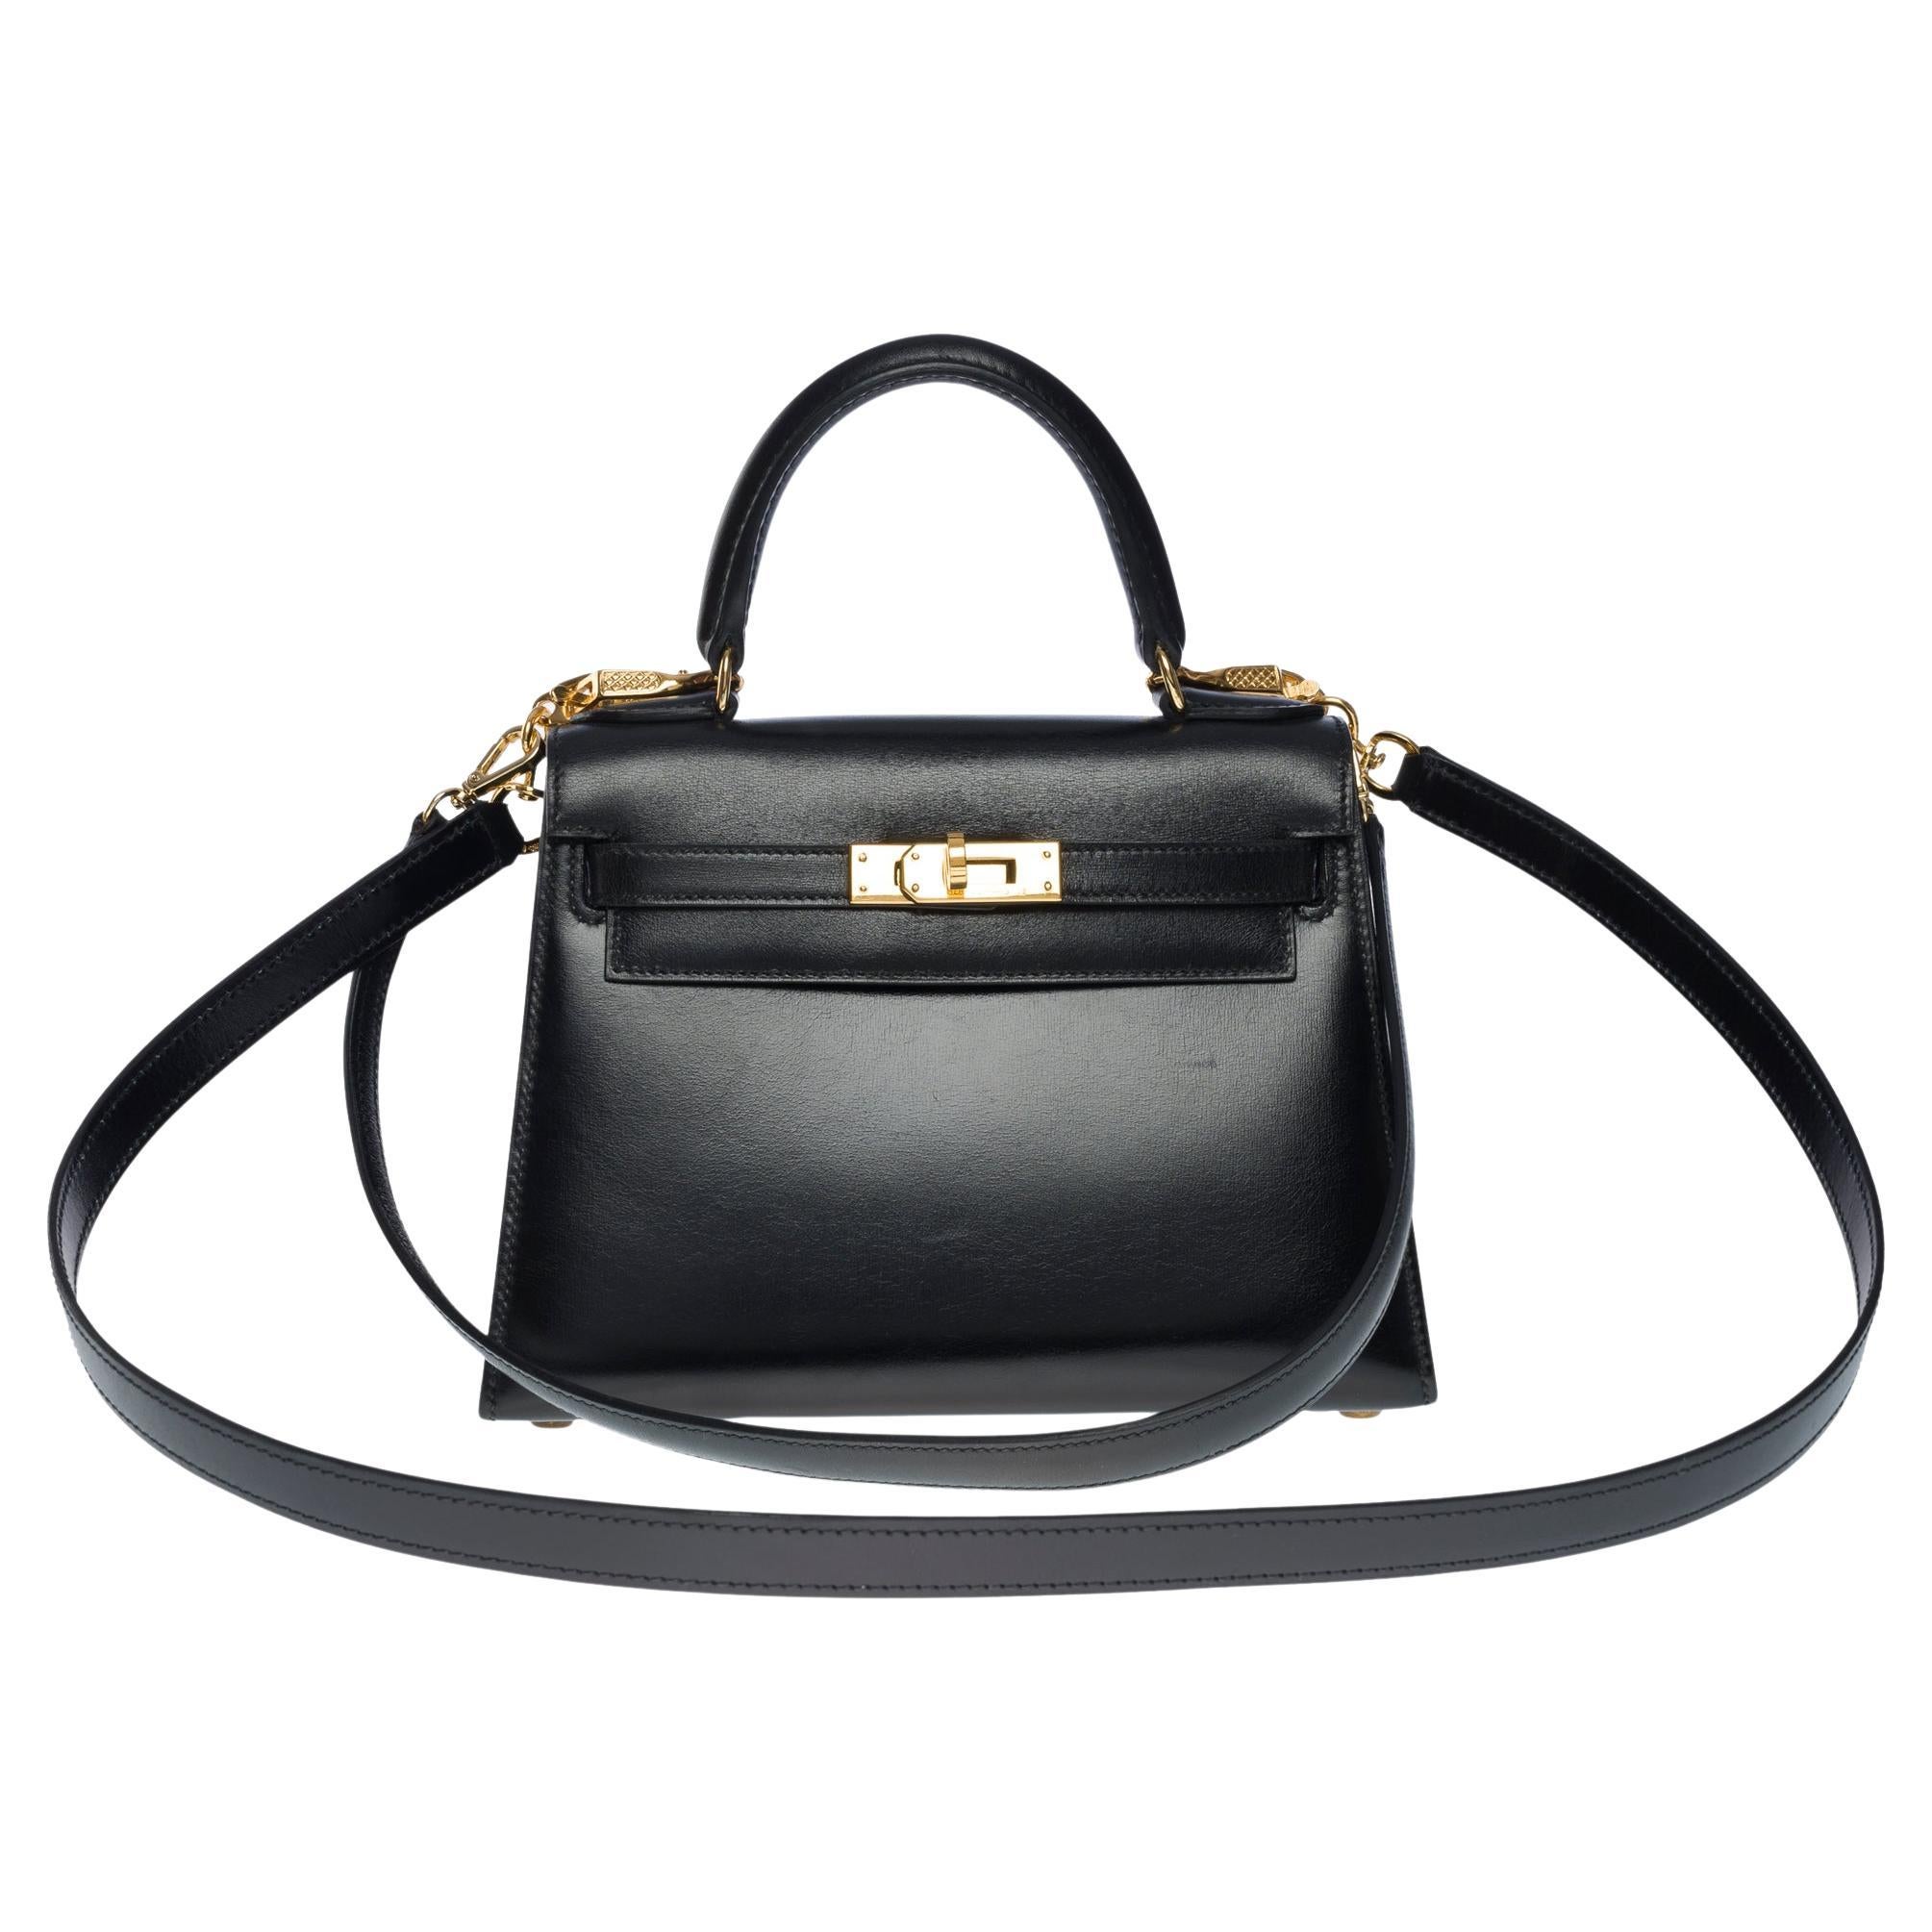 Rare Hermès Mini Kelly 20cm handbag double strap in black box calfskin, GHW